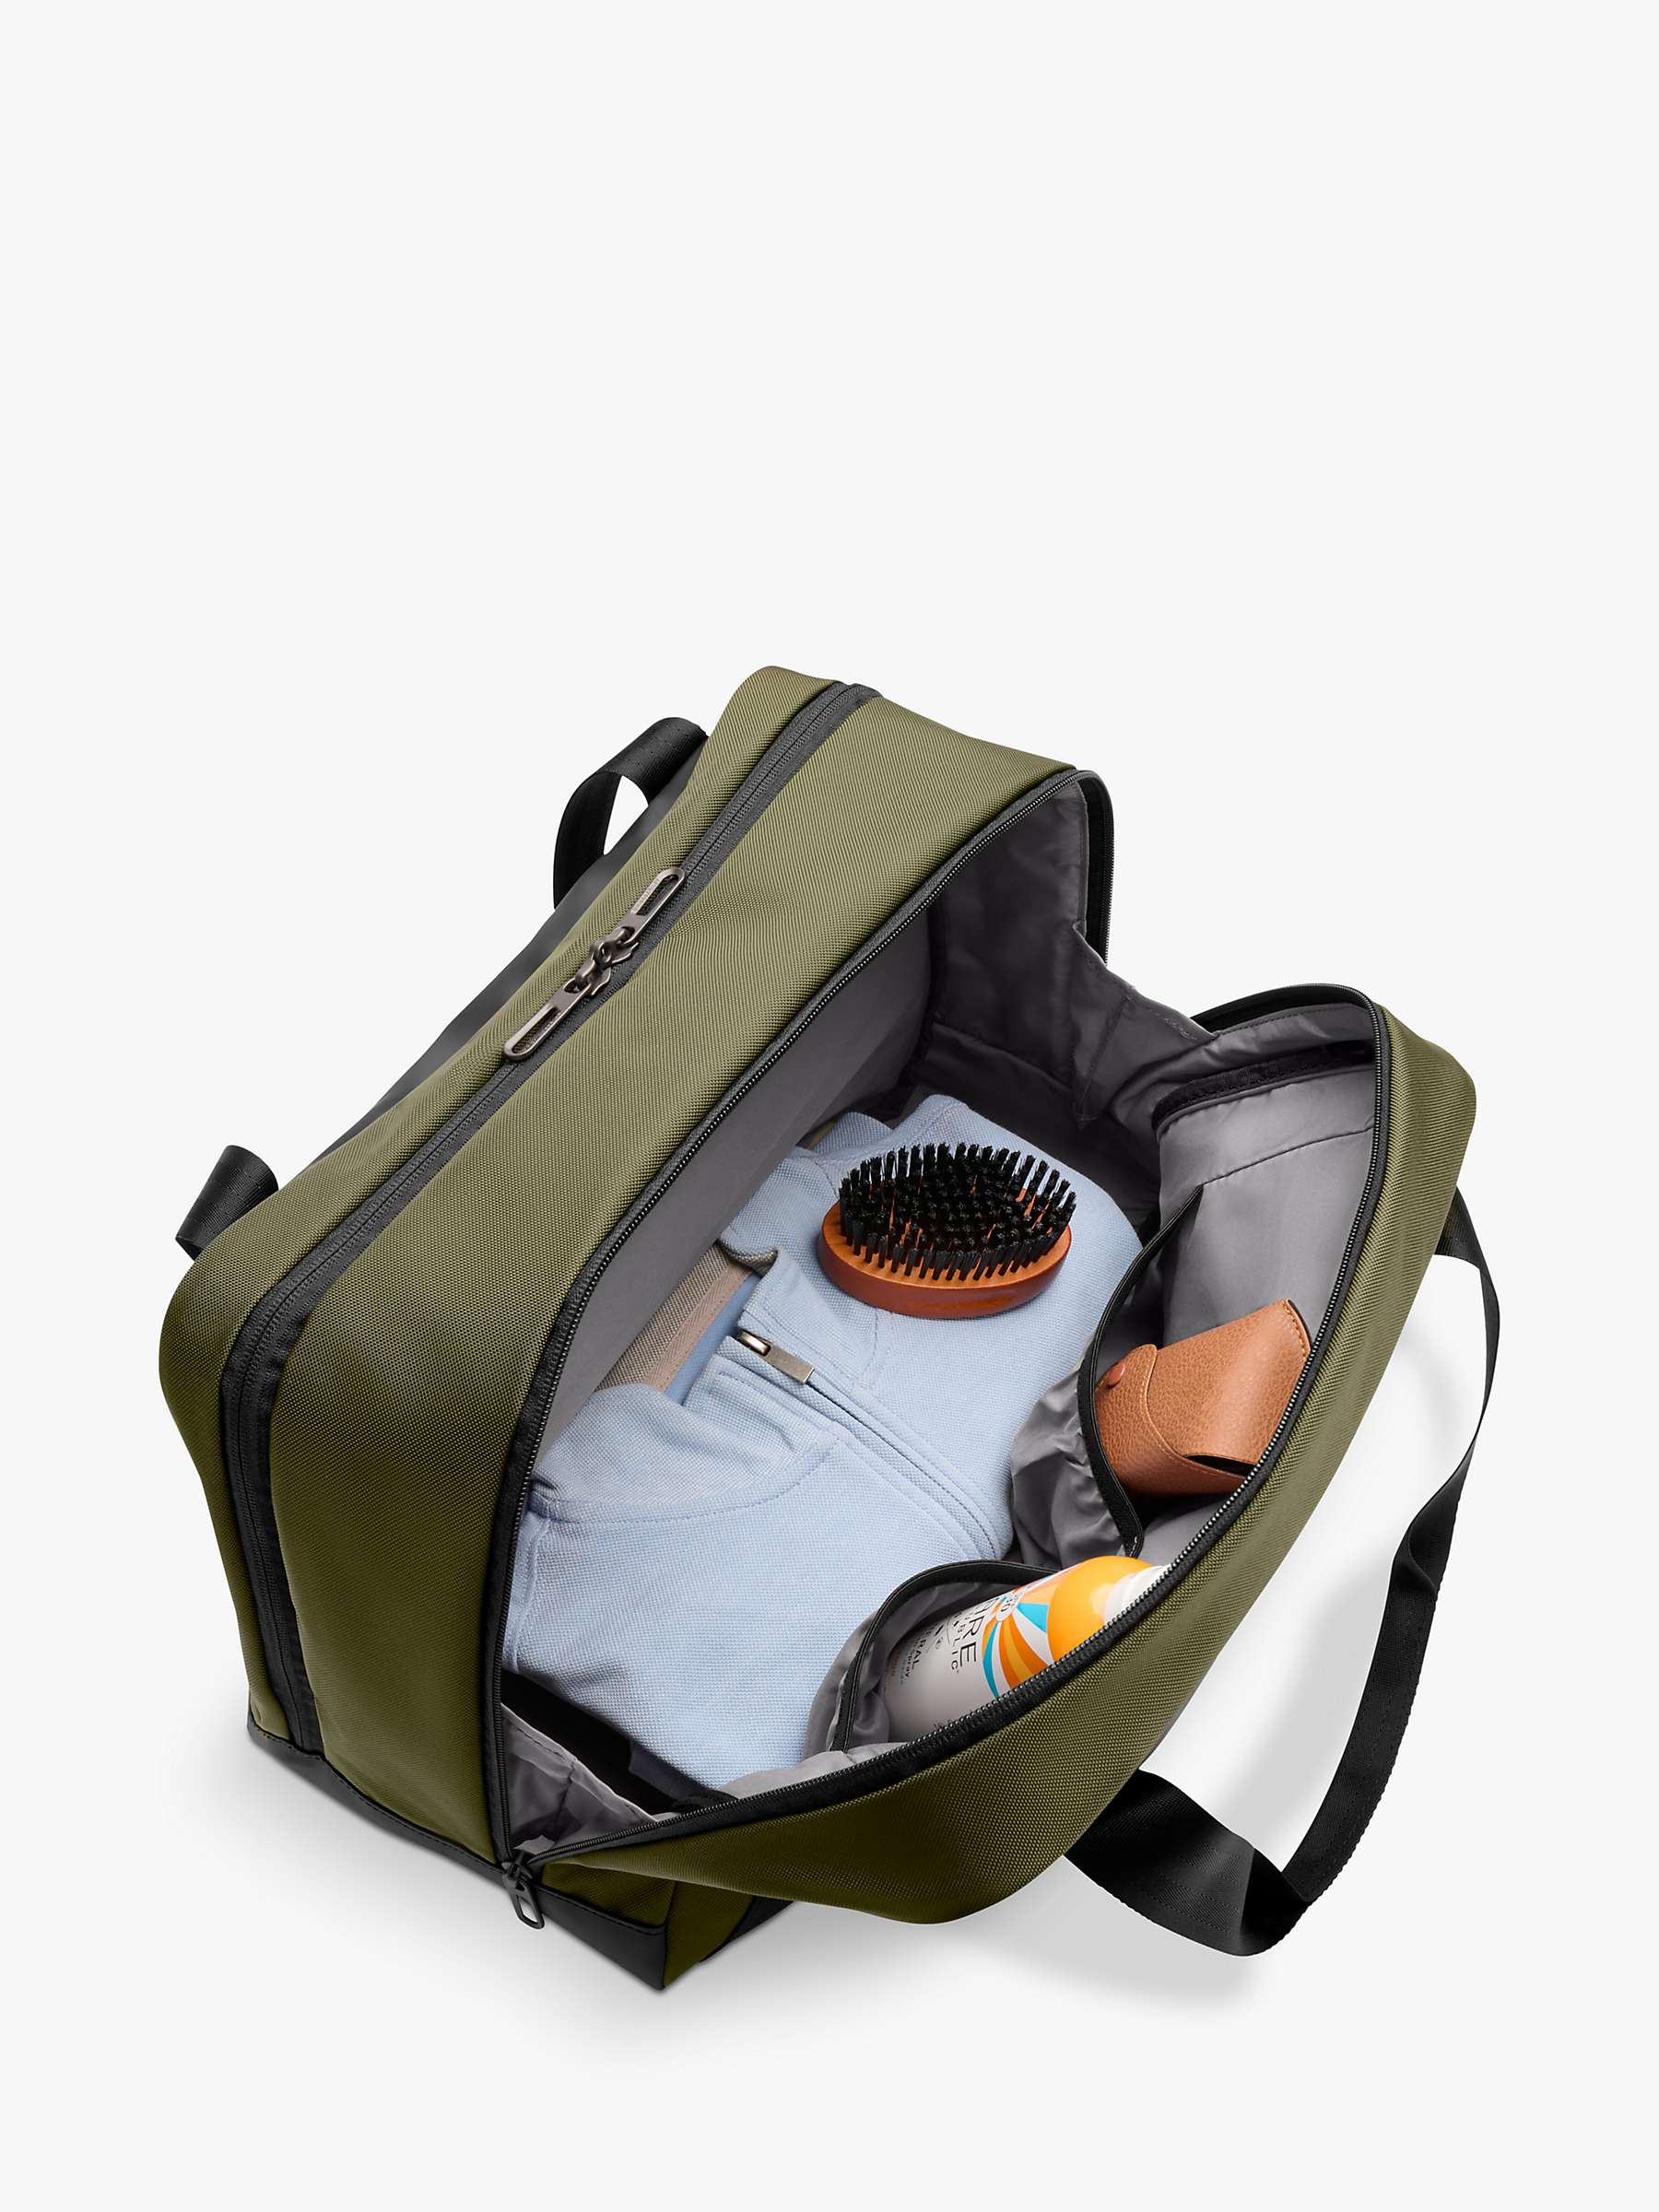 Buy Briggs & Riley ZDX Underseat Cabin Bag Online at johnlewis.com